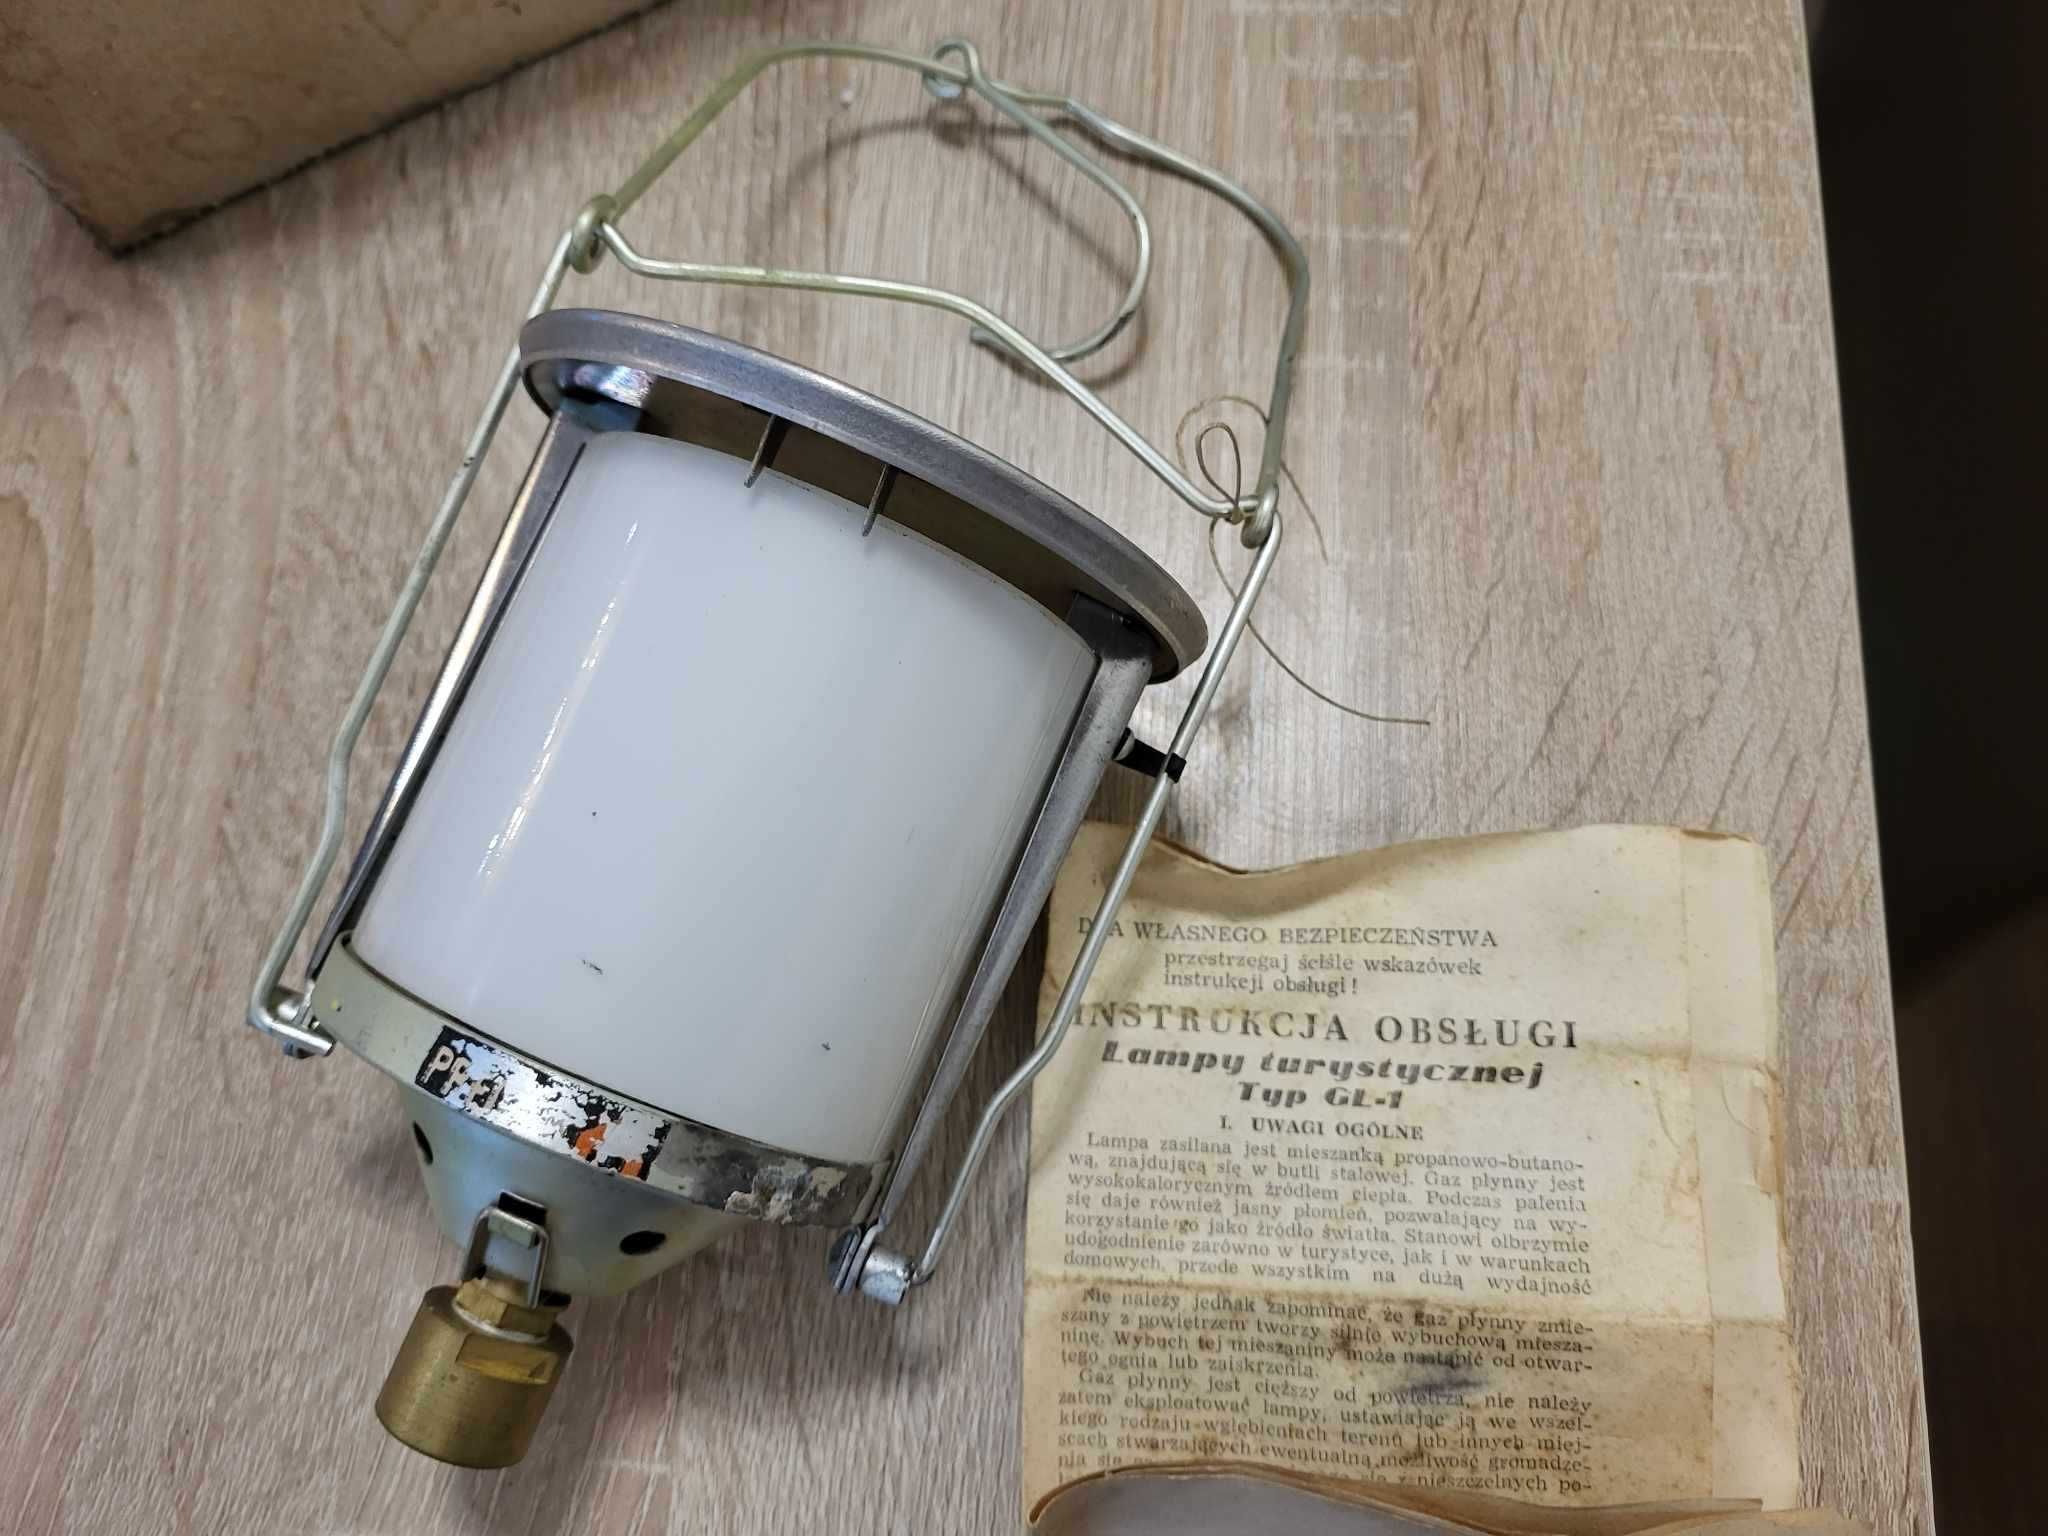 Stara gazowa lampa turystyczna GL-1